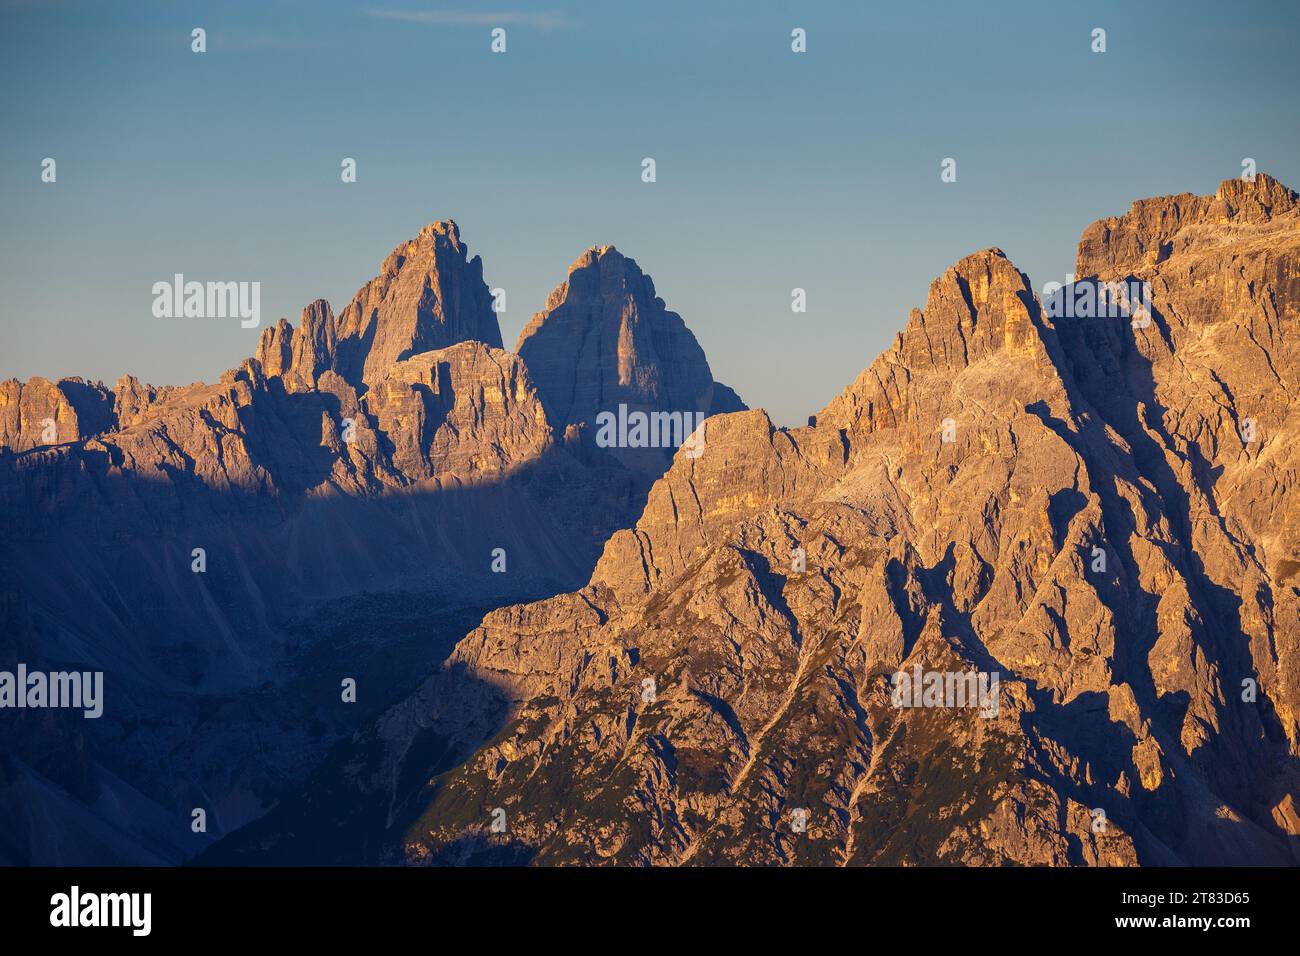 Alpenglow at sunrise, view on the Tre Cime di Lavaredo mountain peaks. The Sesto Dolomites. Italian Alps. Europe Stock Photo